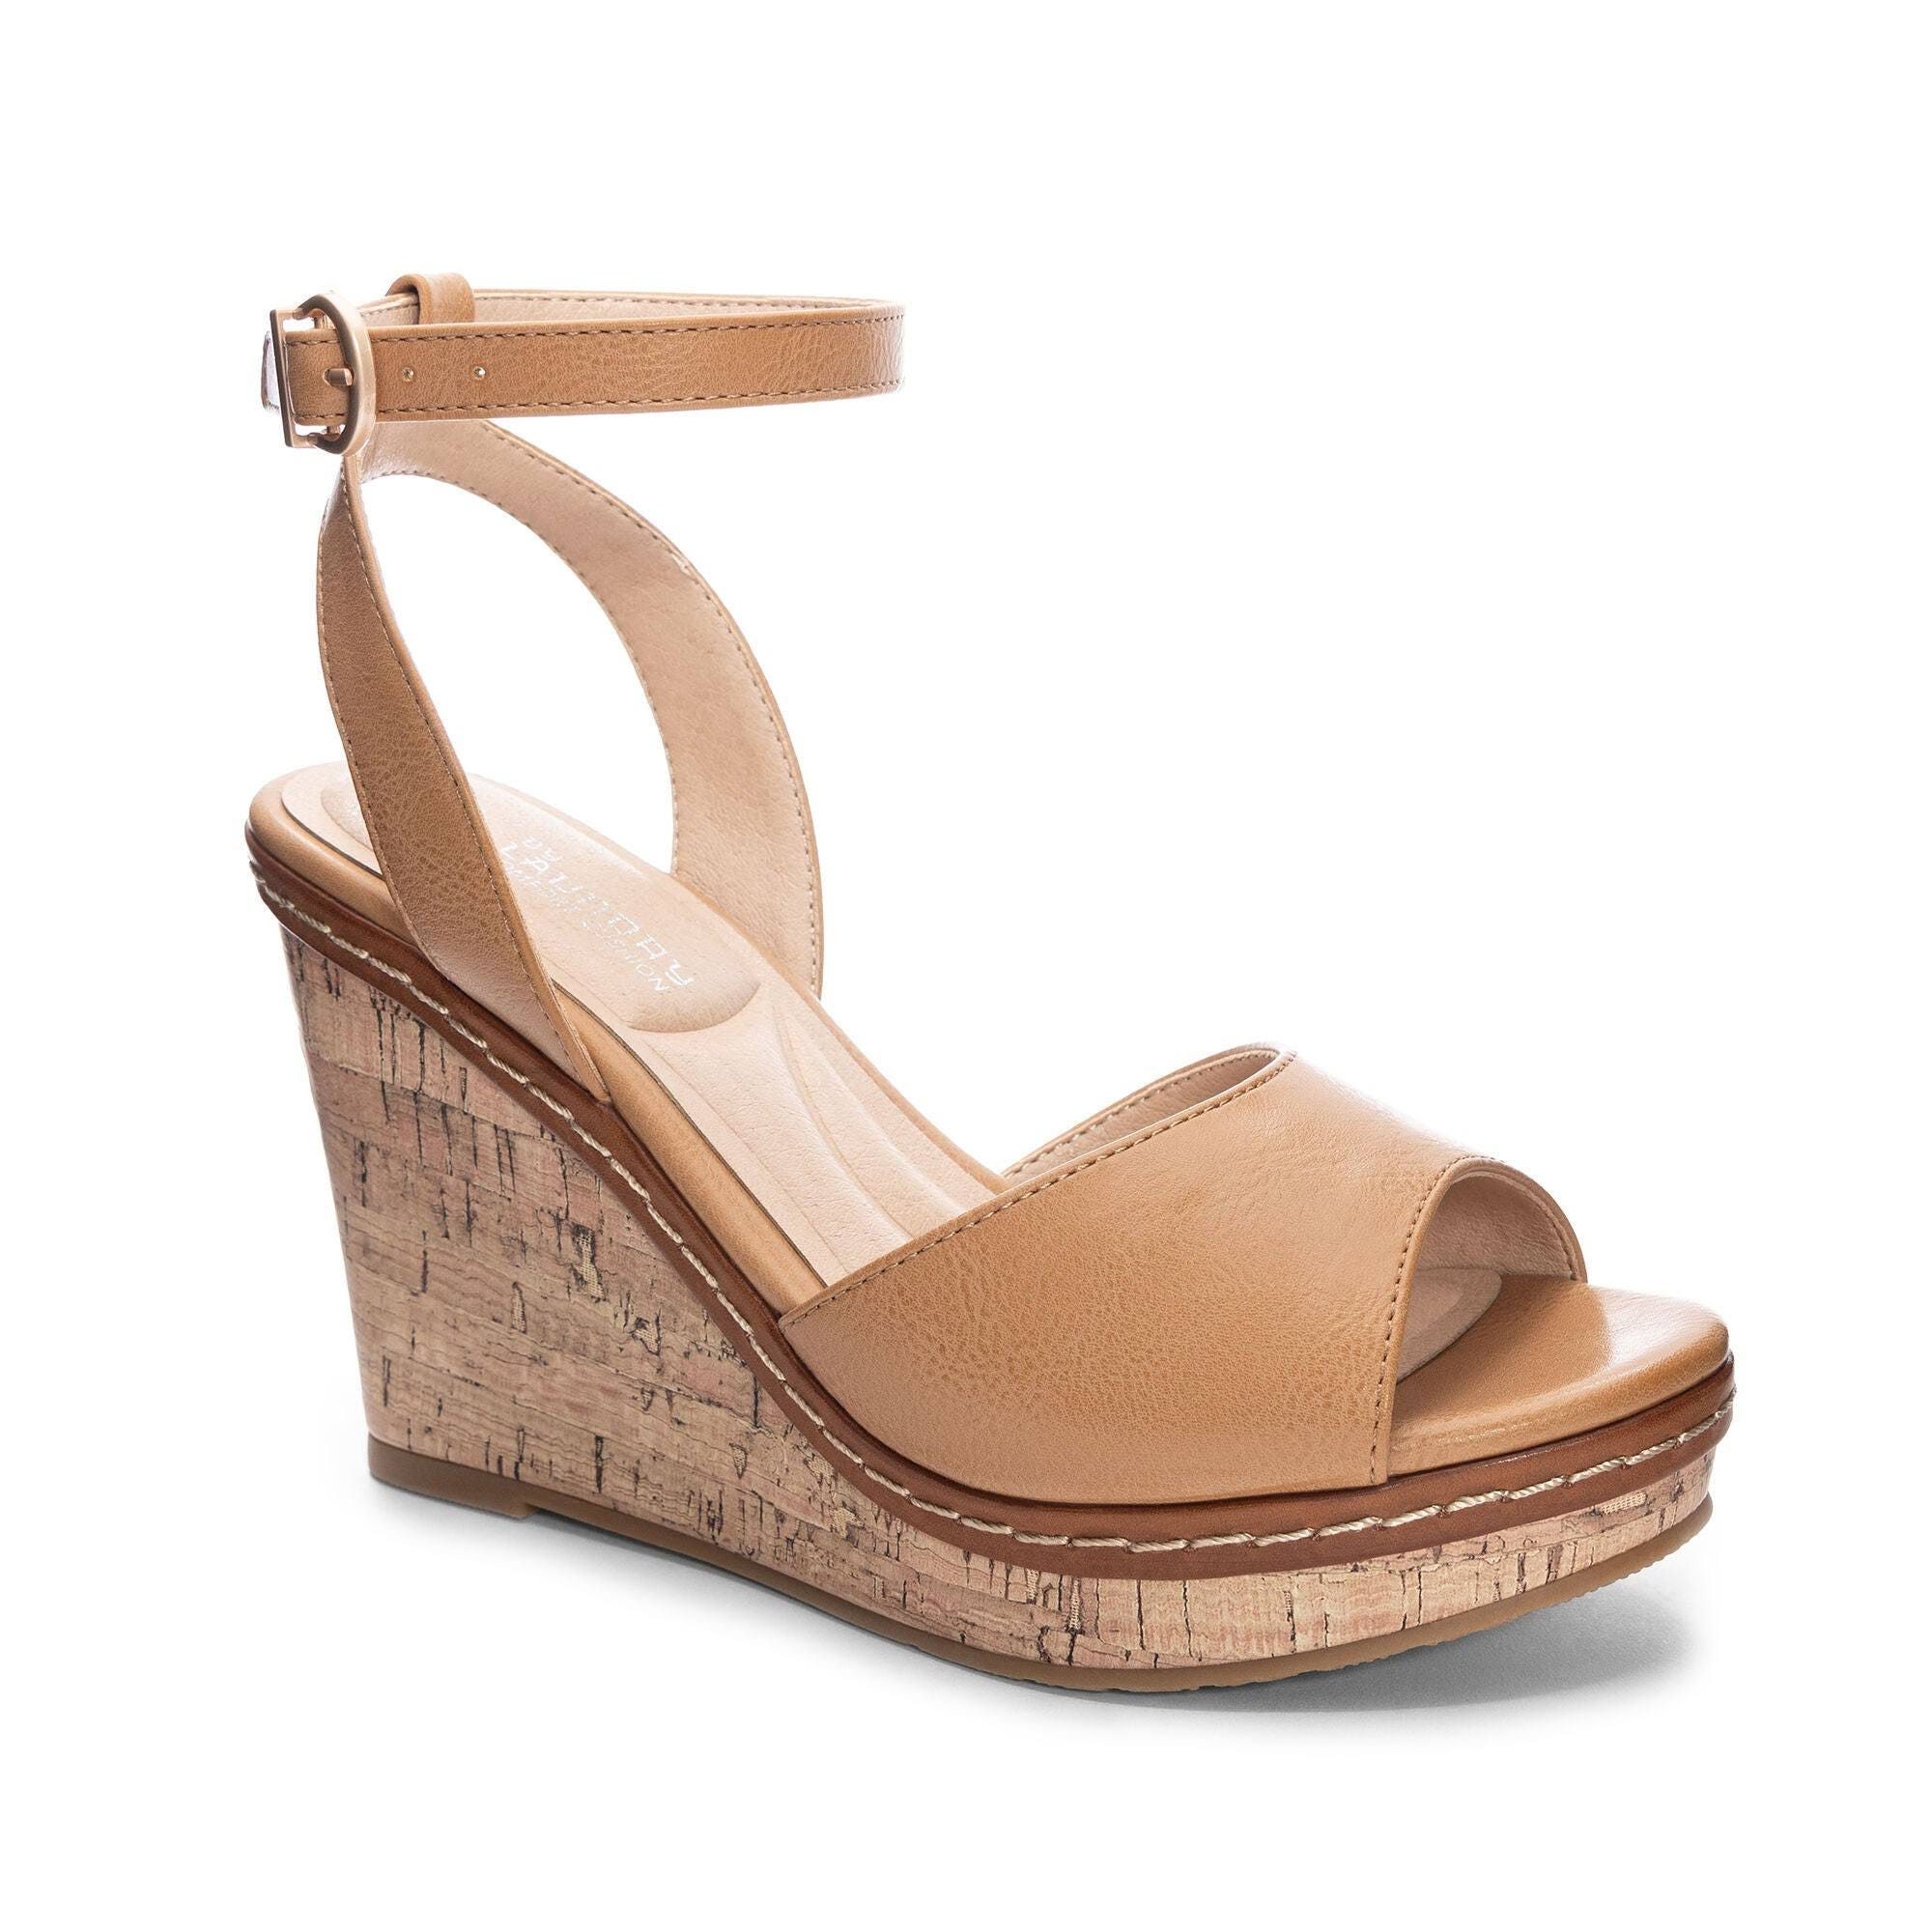 Summertime Nude Platform Sandal with Leathery Charm | Image